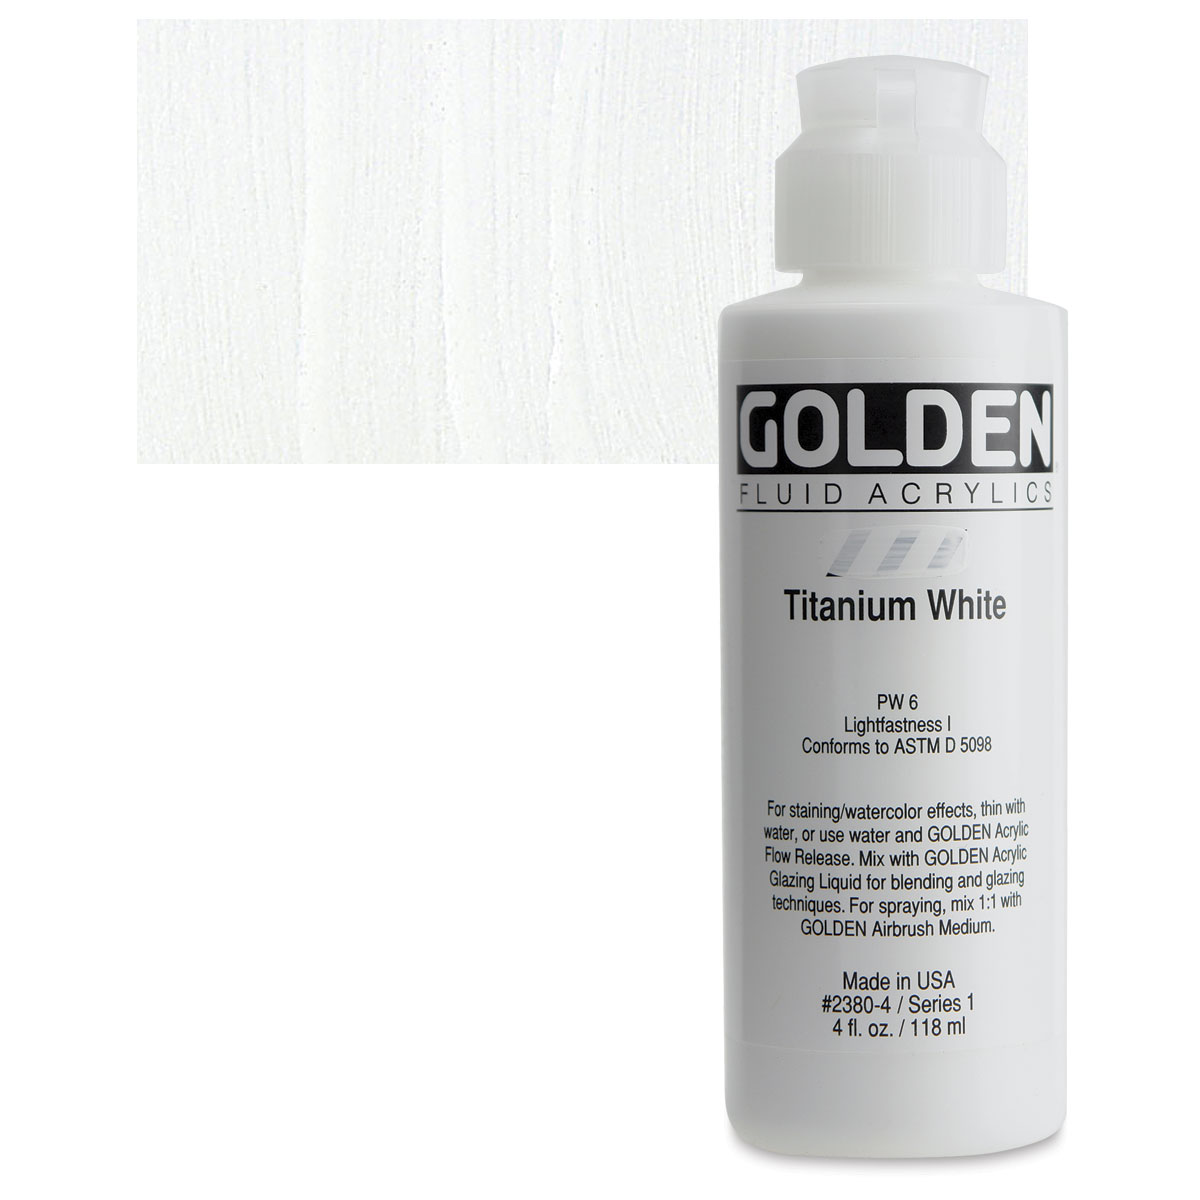 Golden Fluid Acrylics 16oz Titanium White